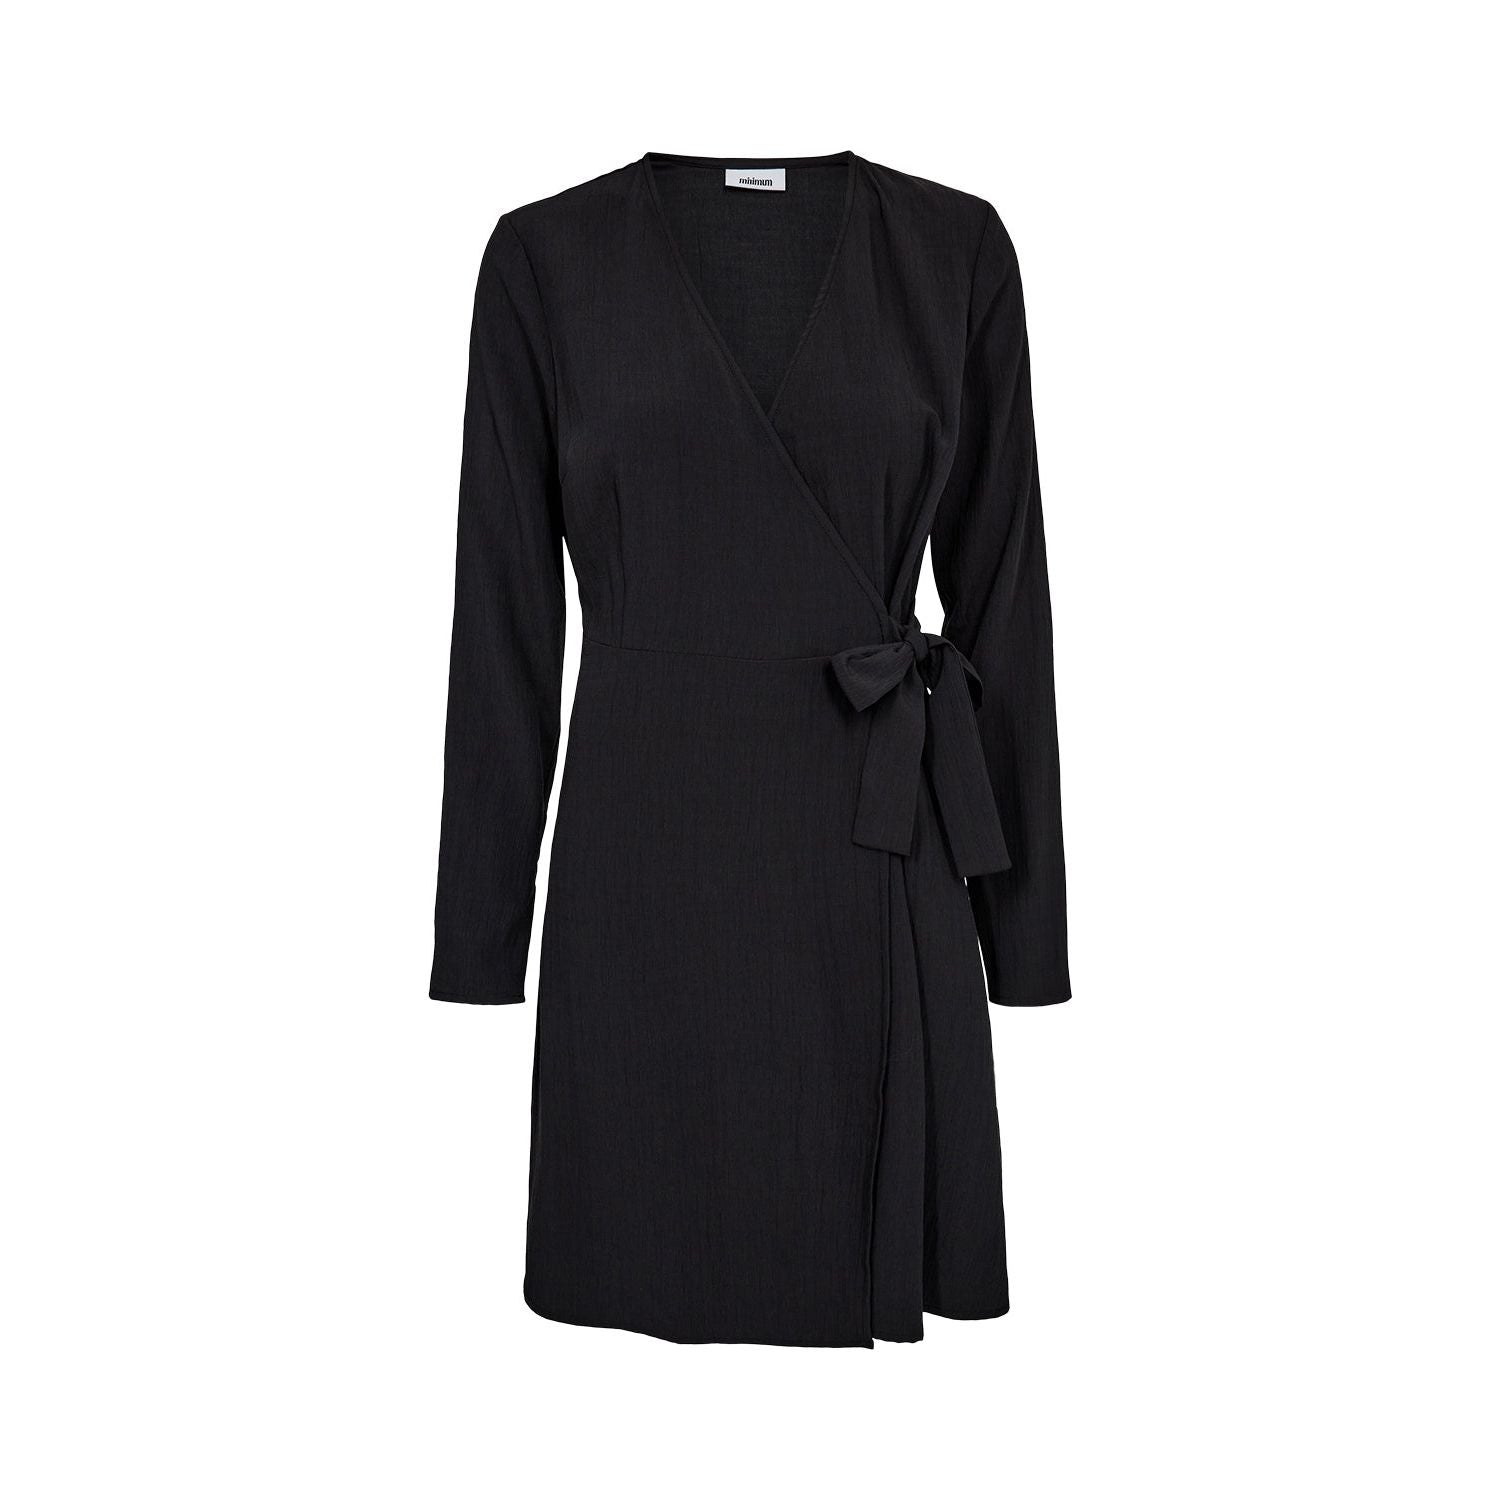 Minimum - Betties Short Dress in Black